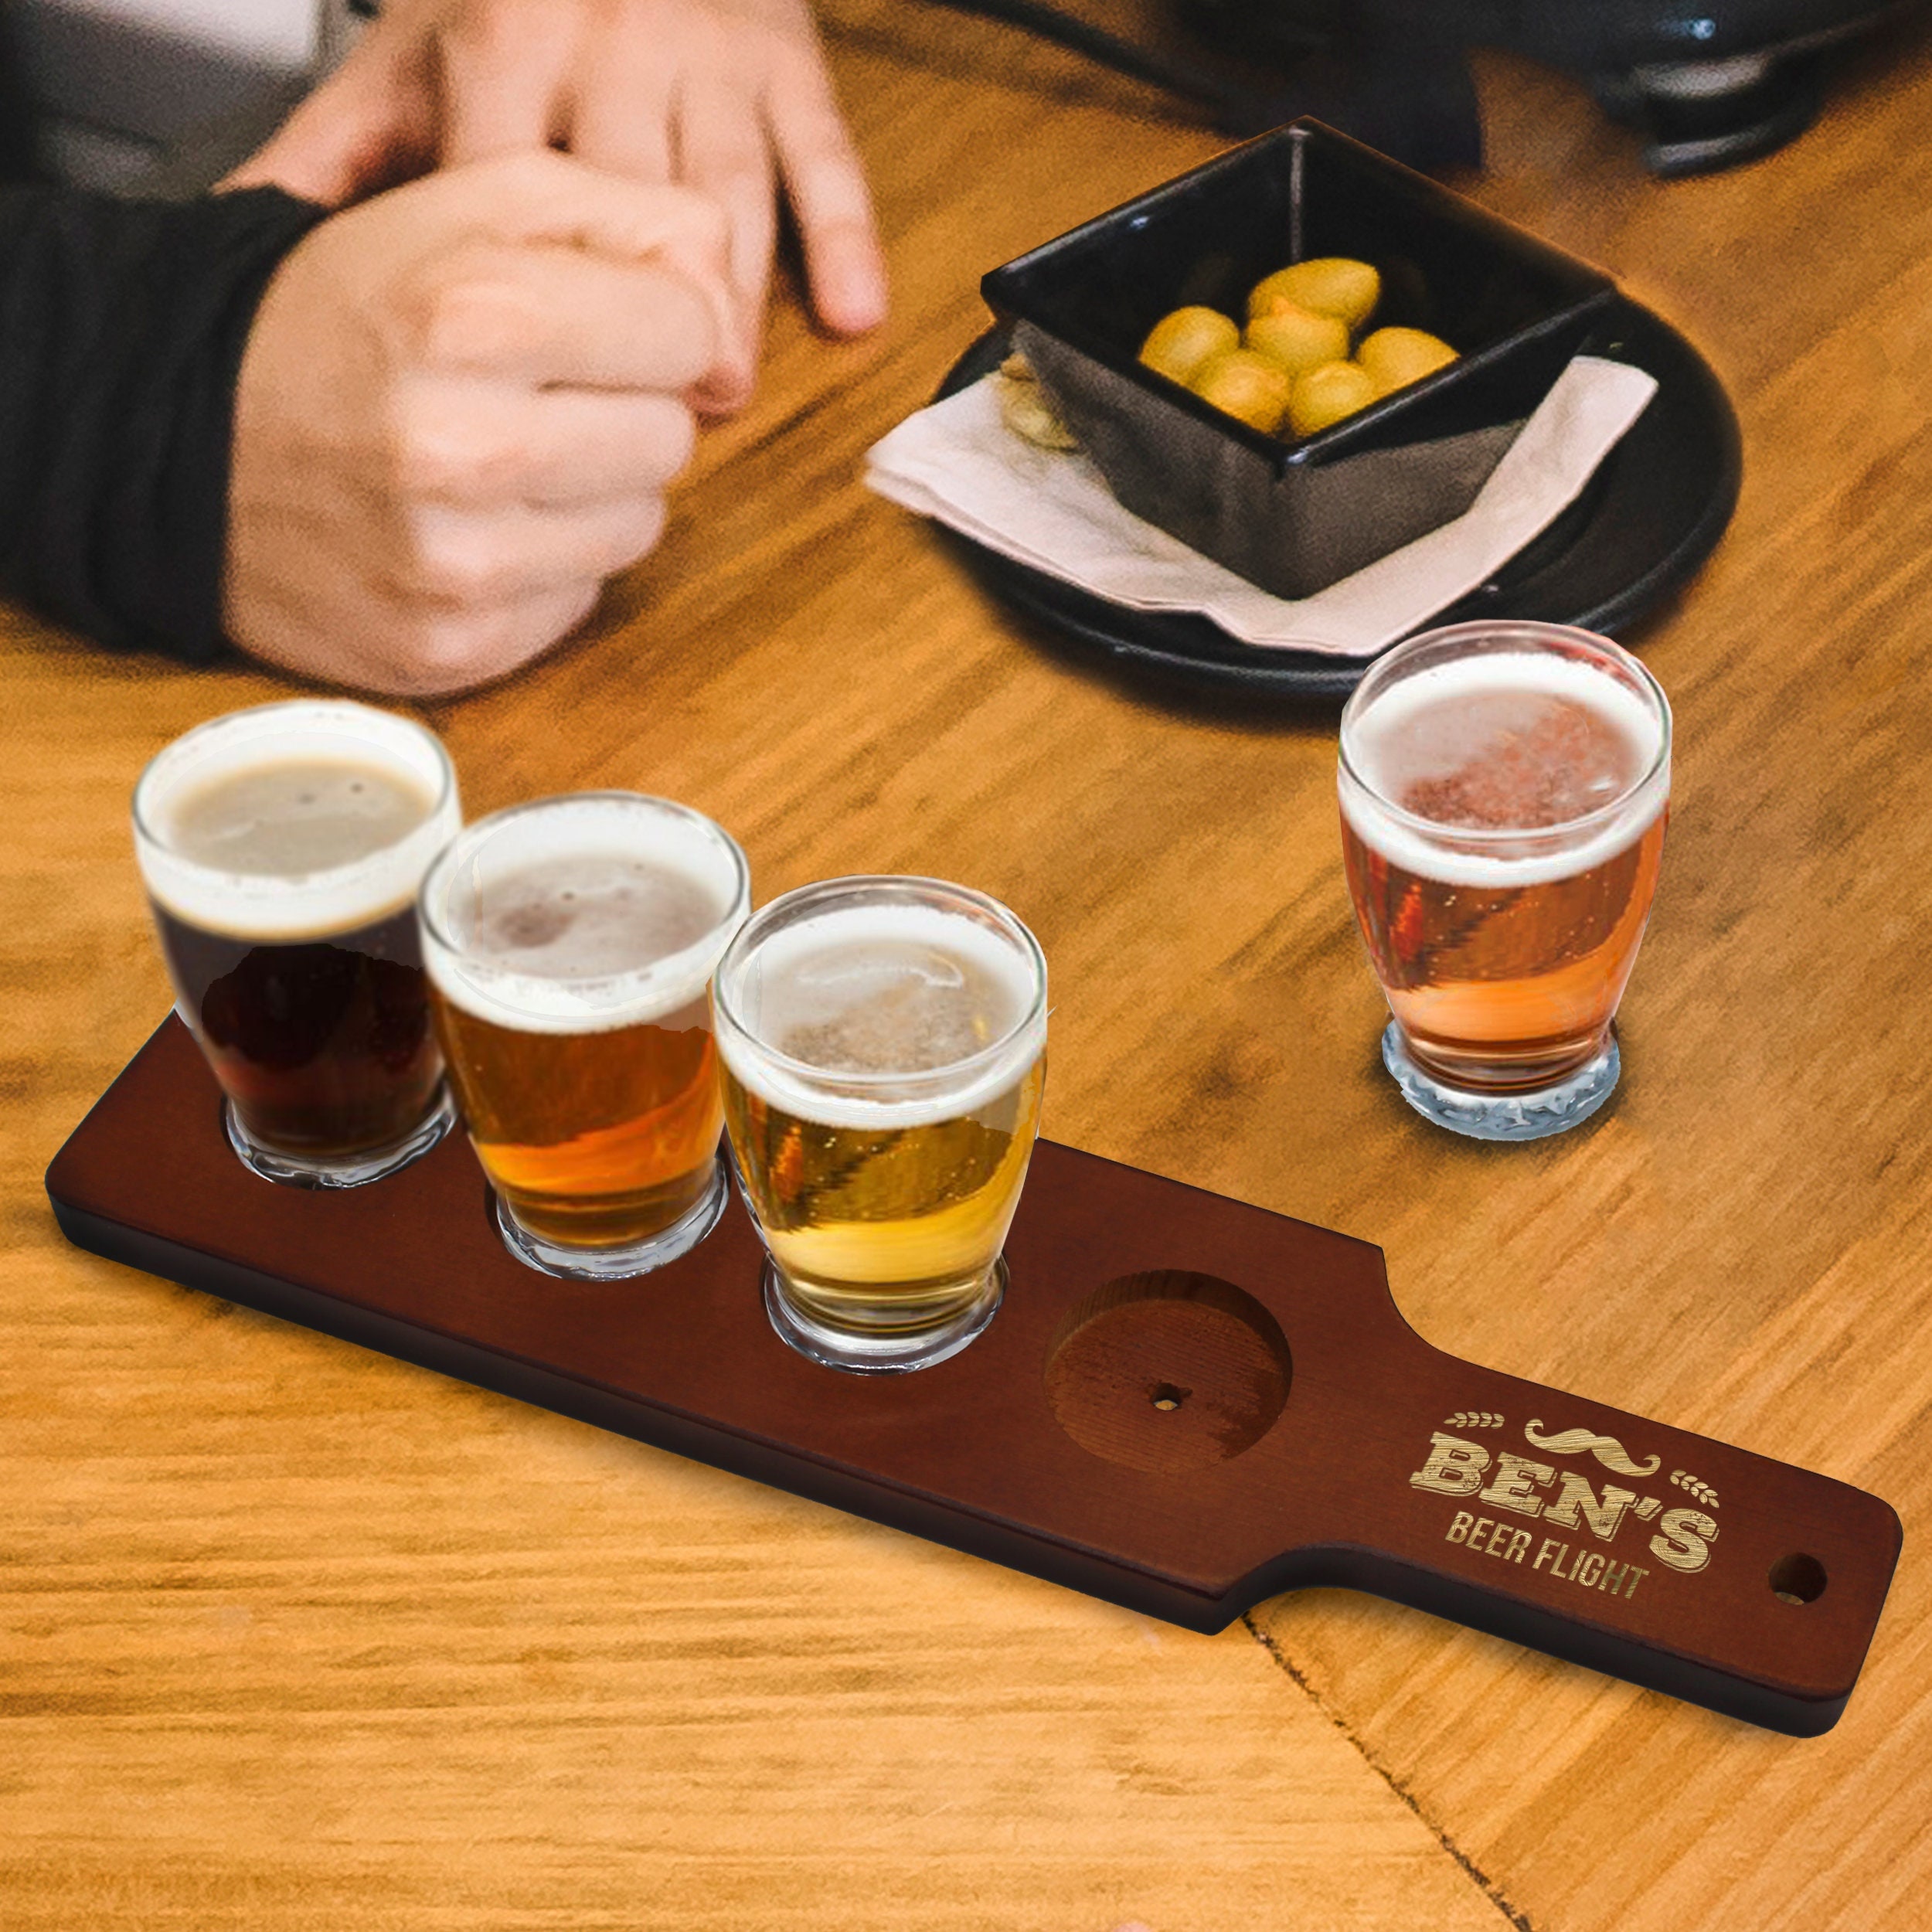 DEI Beer Tasting Serving Set Includes 4 Glasses & Wood Paddle 